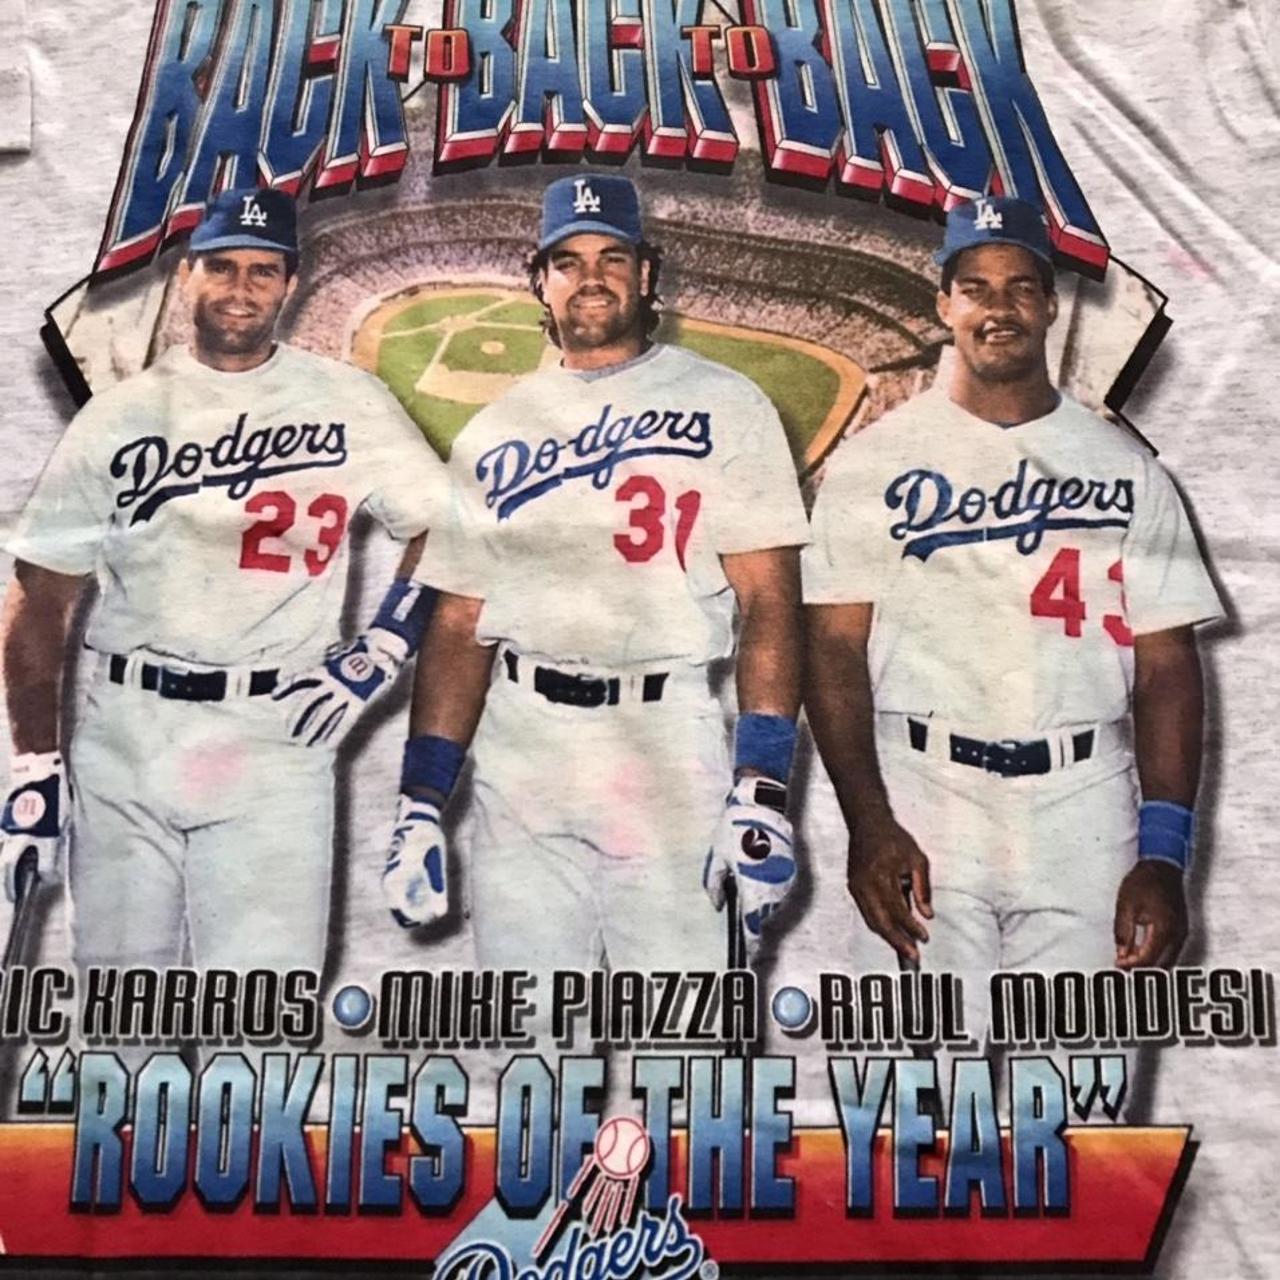 XL Vintage Los Angeles Dodgers NOS 90s T-Shirt — Blackwater